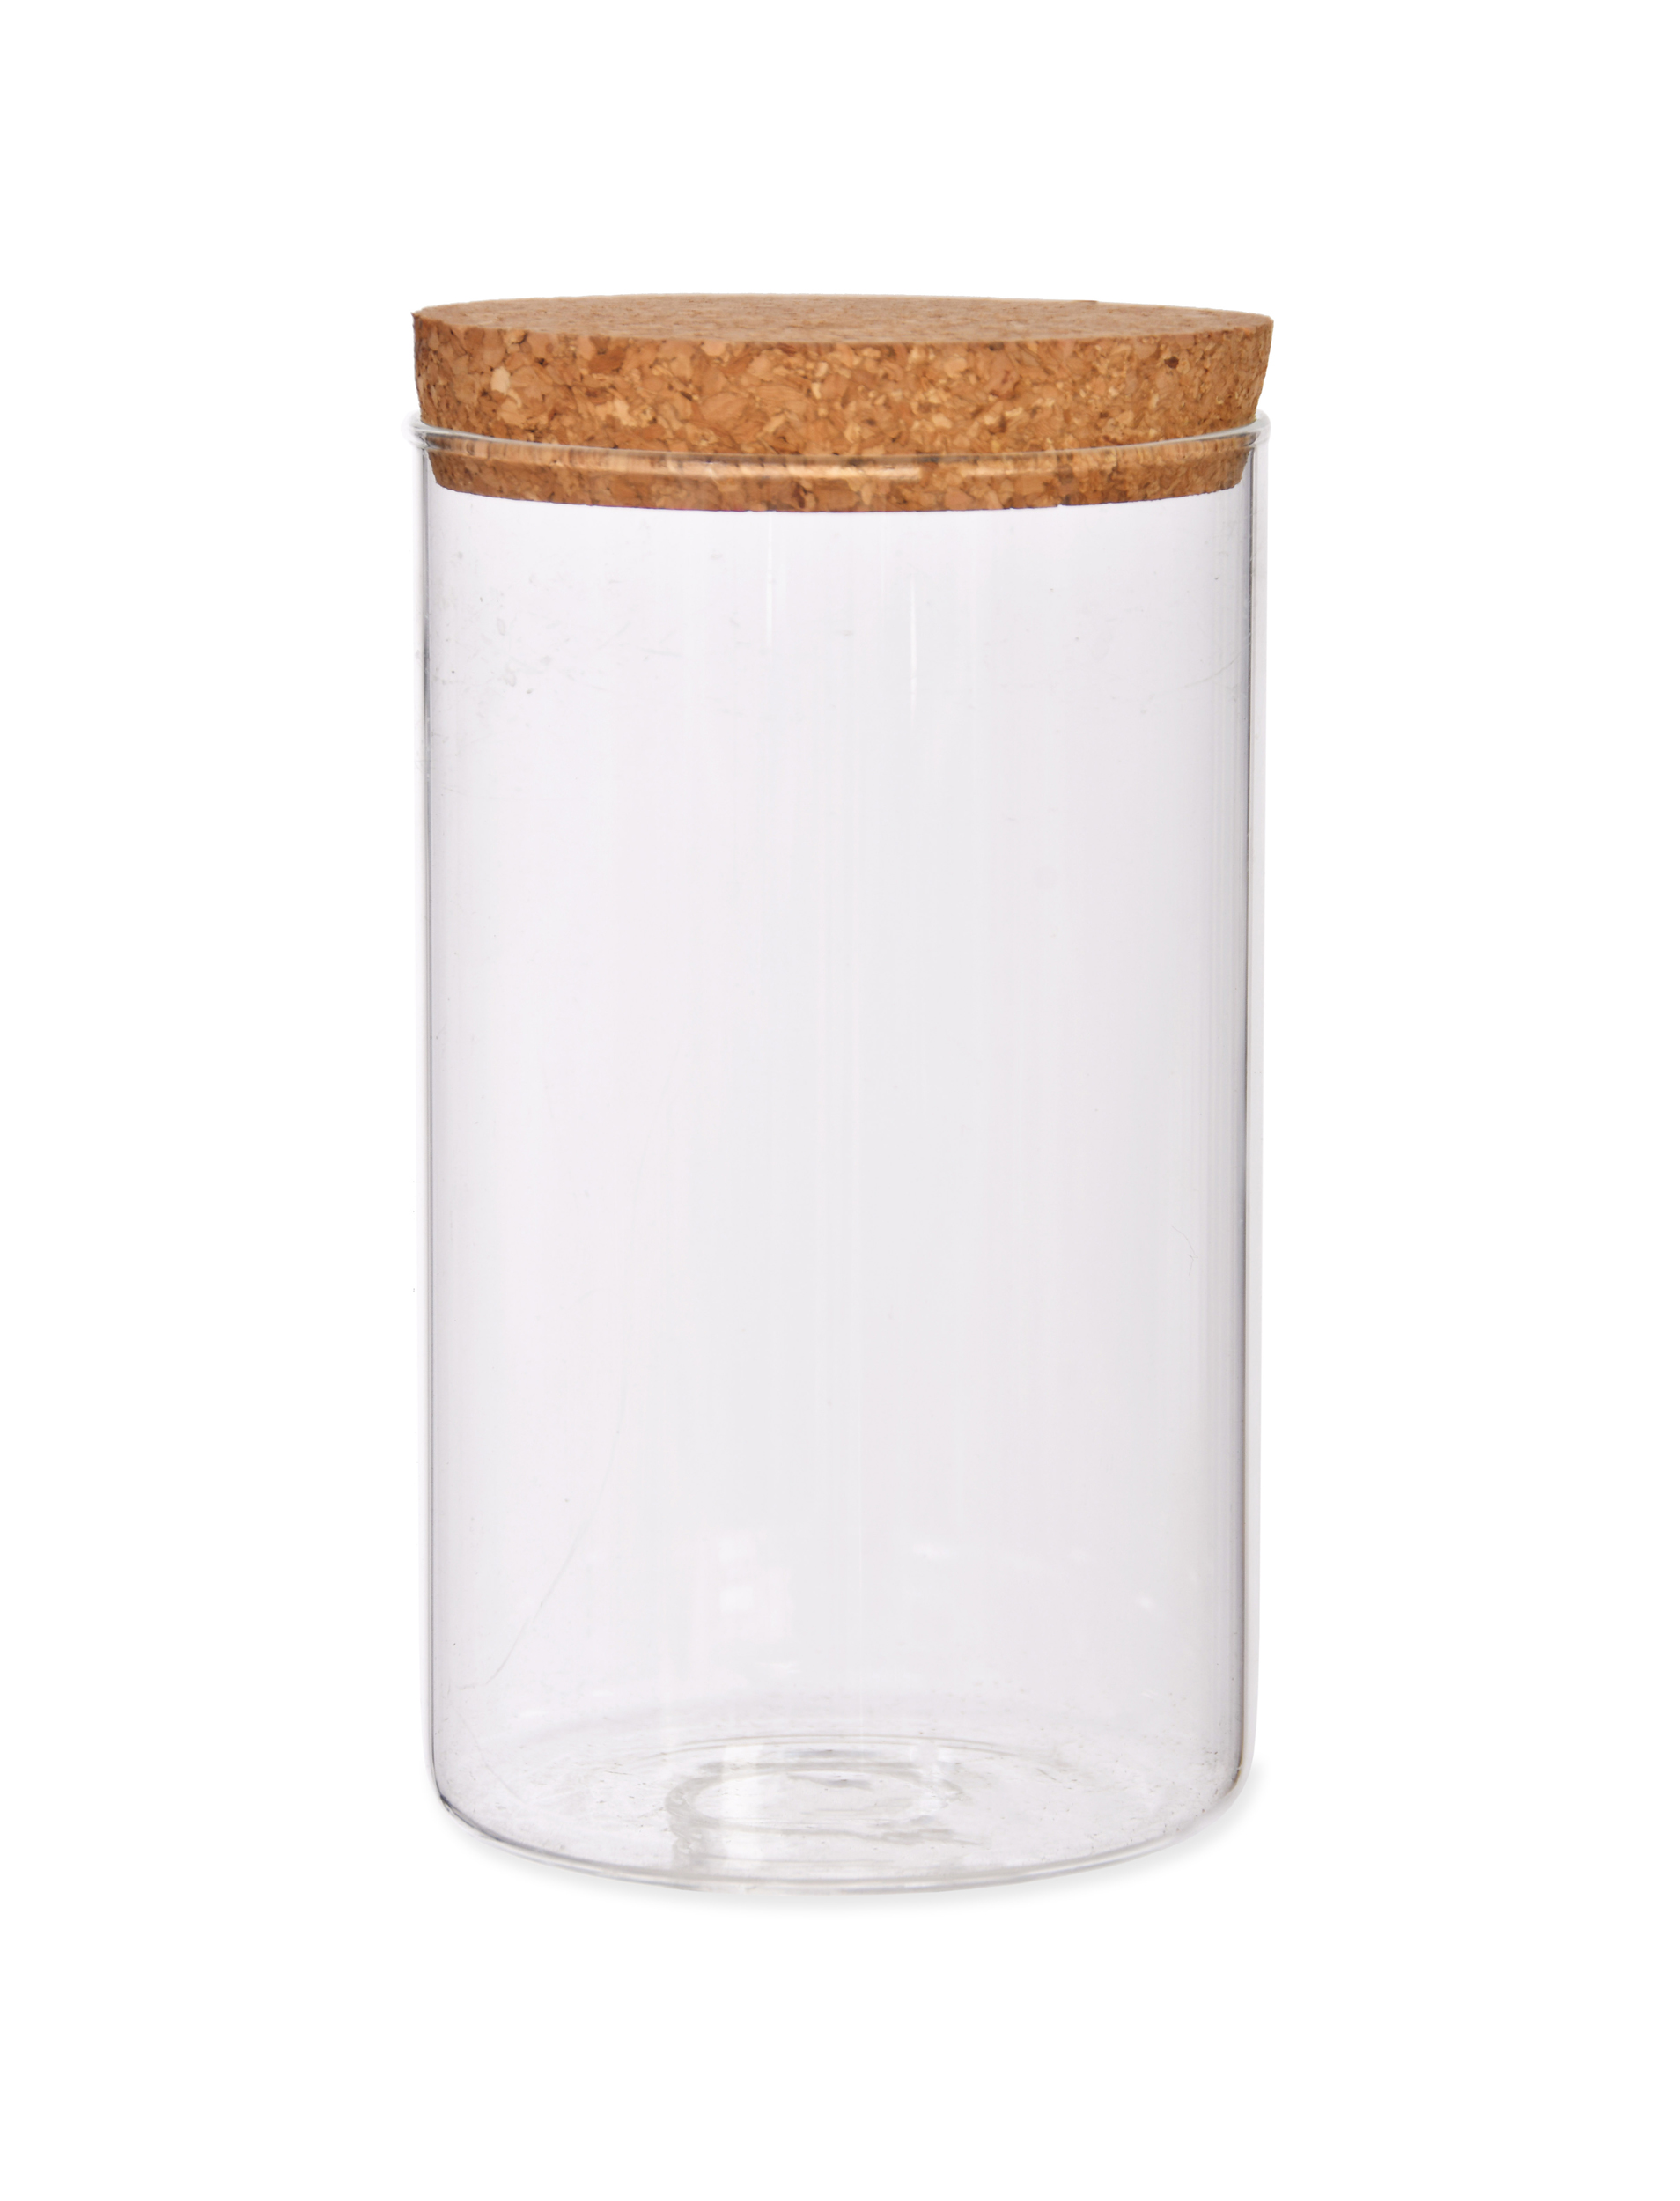 Garden Trading Provender Glass Storage Jar - Large